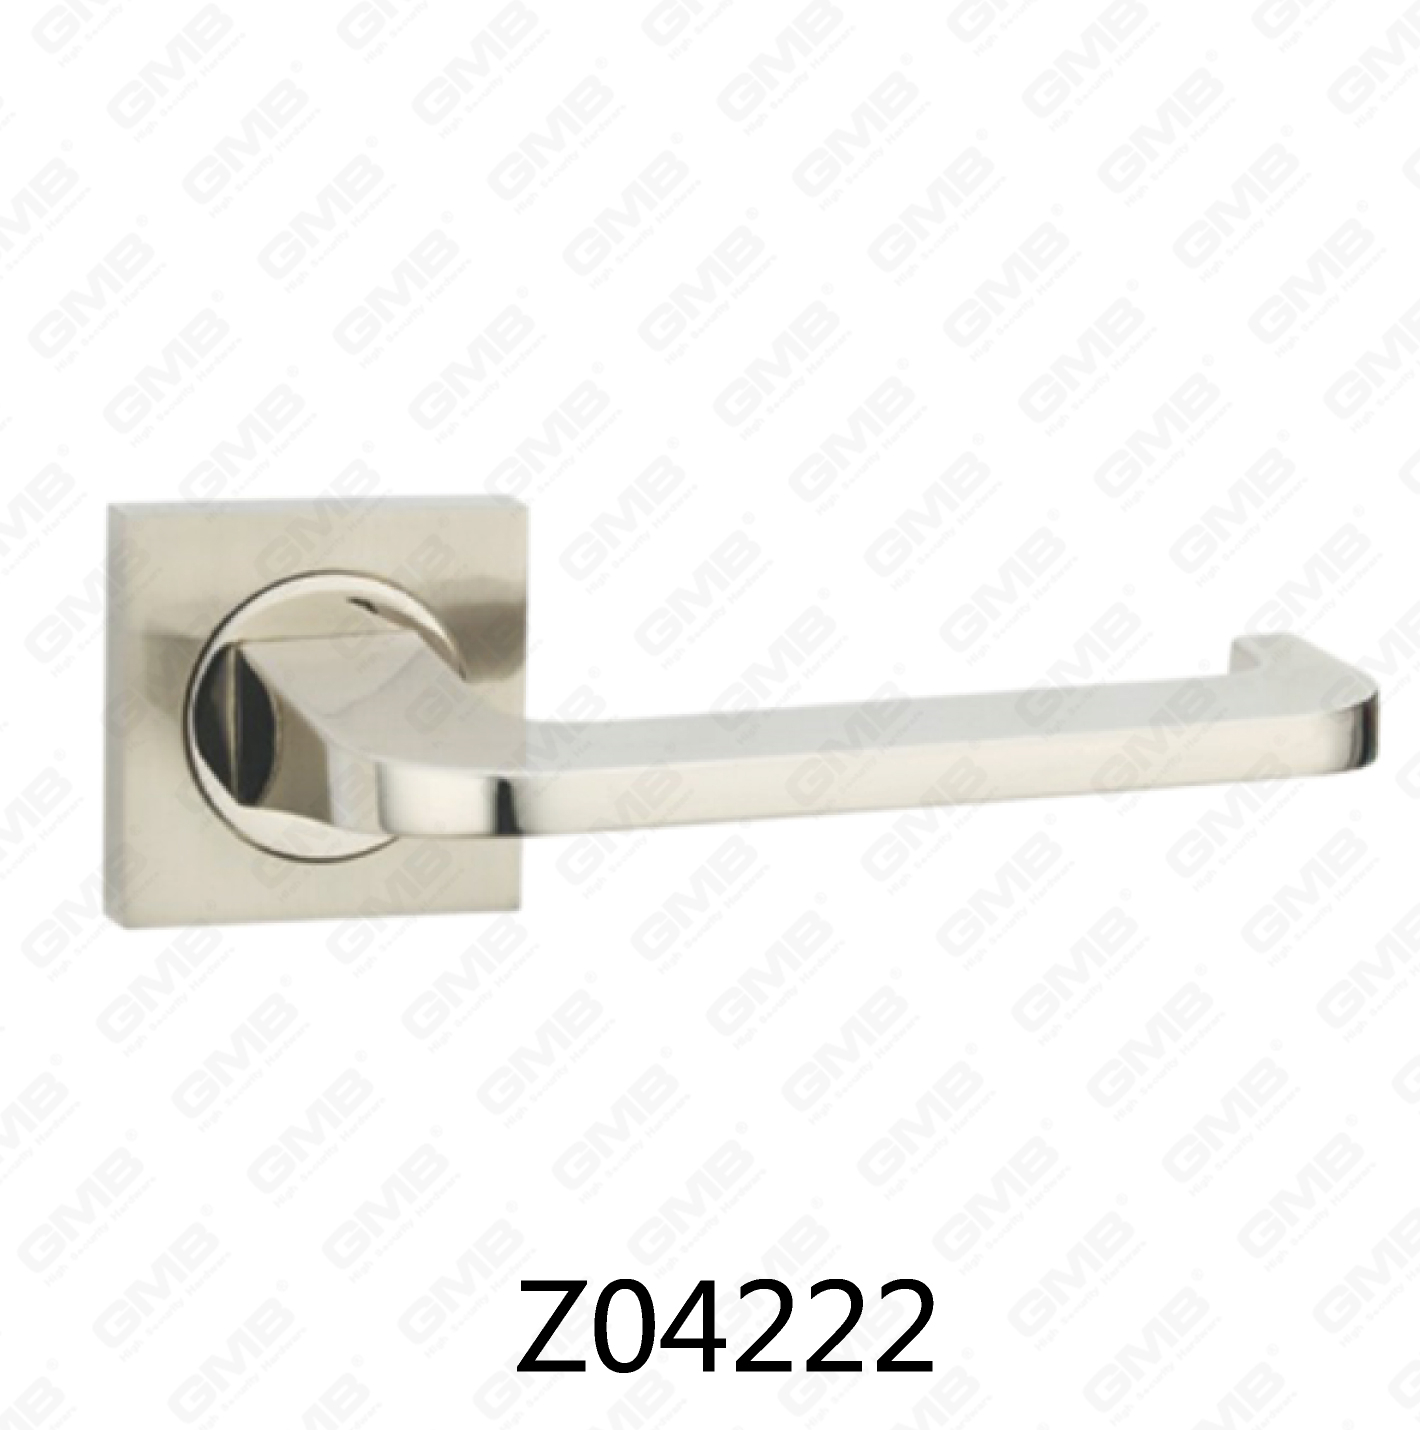 Manija de puerta de roseta de aluminio de aleación de zinc Zamak con roseta redonda (Z04222)